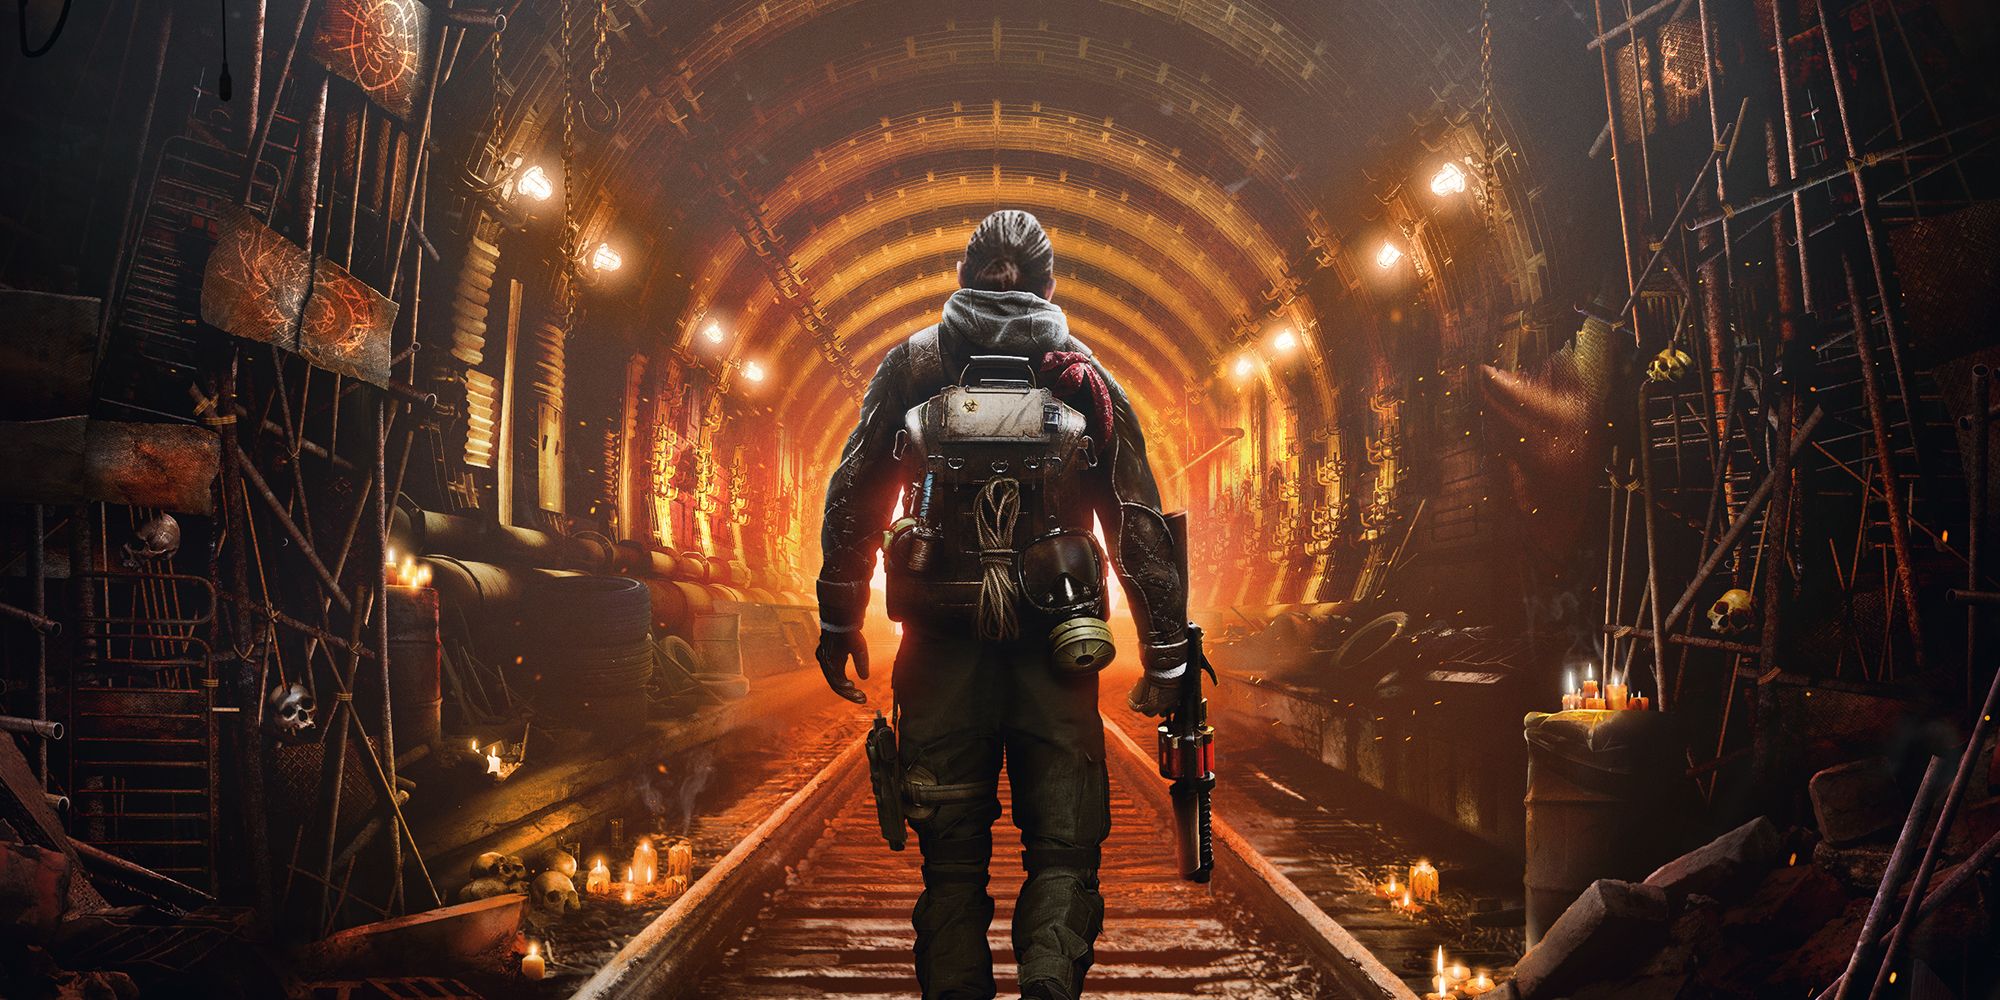 Metro Awakening protagonist entering a brightly lit tunnel